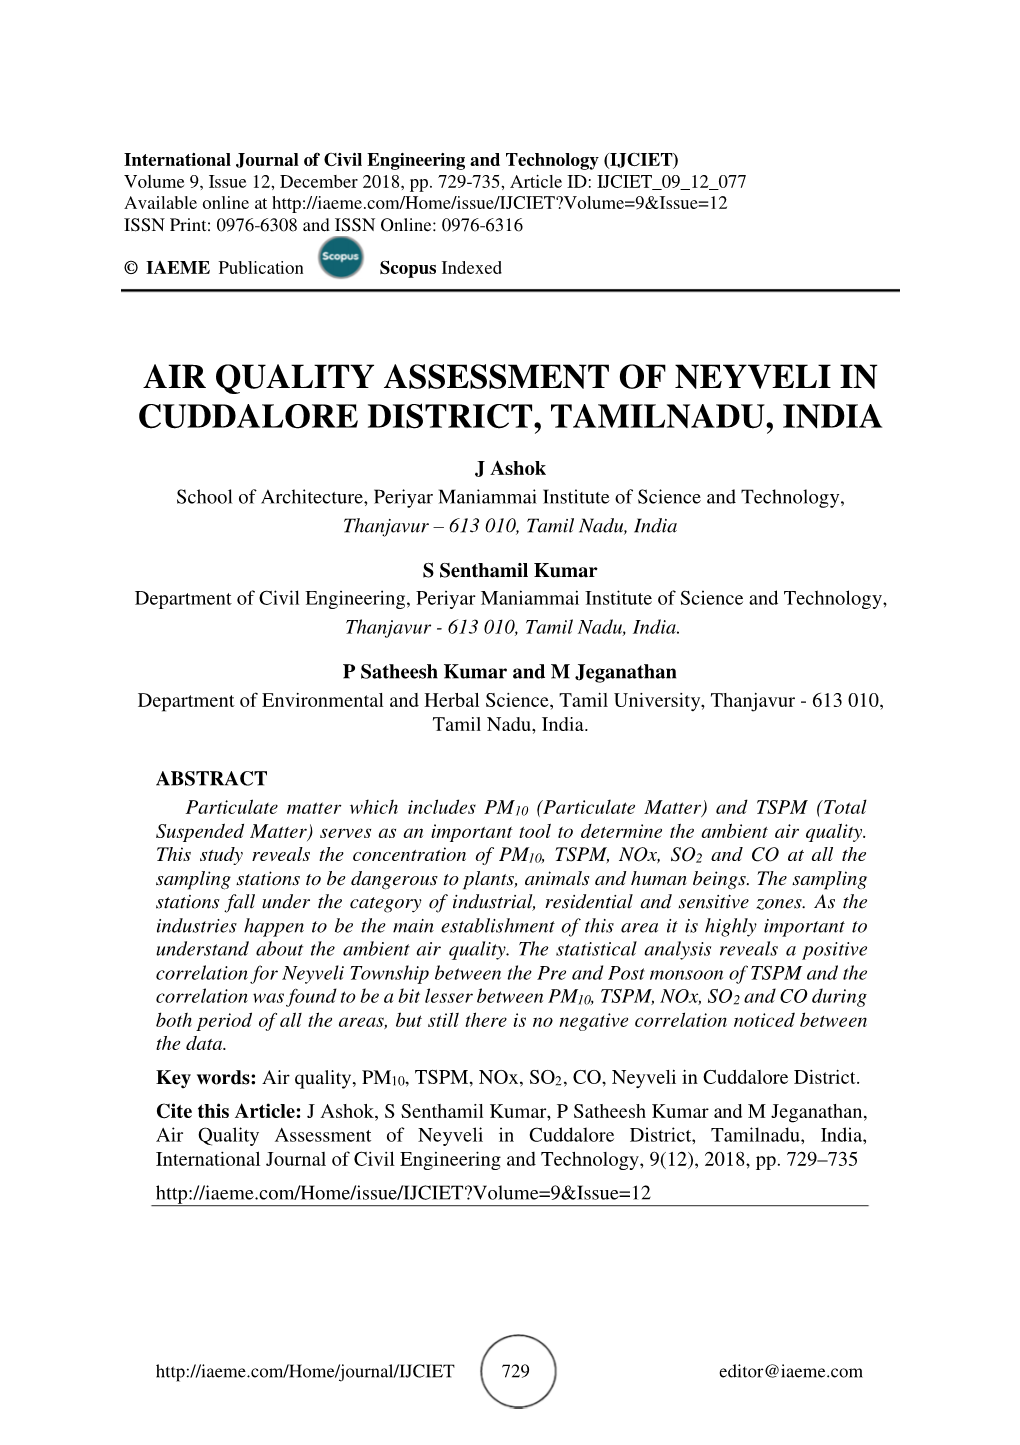 Air Quality Assessment of Neyveli in Cuddalore District, Tamilnadu, India